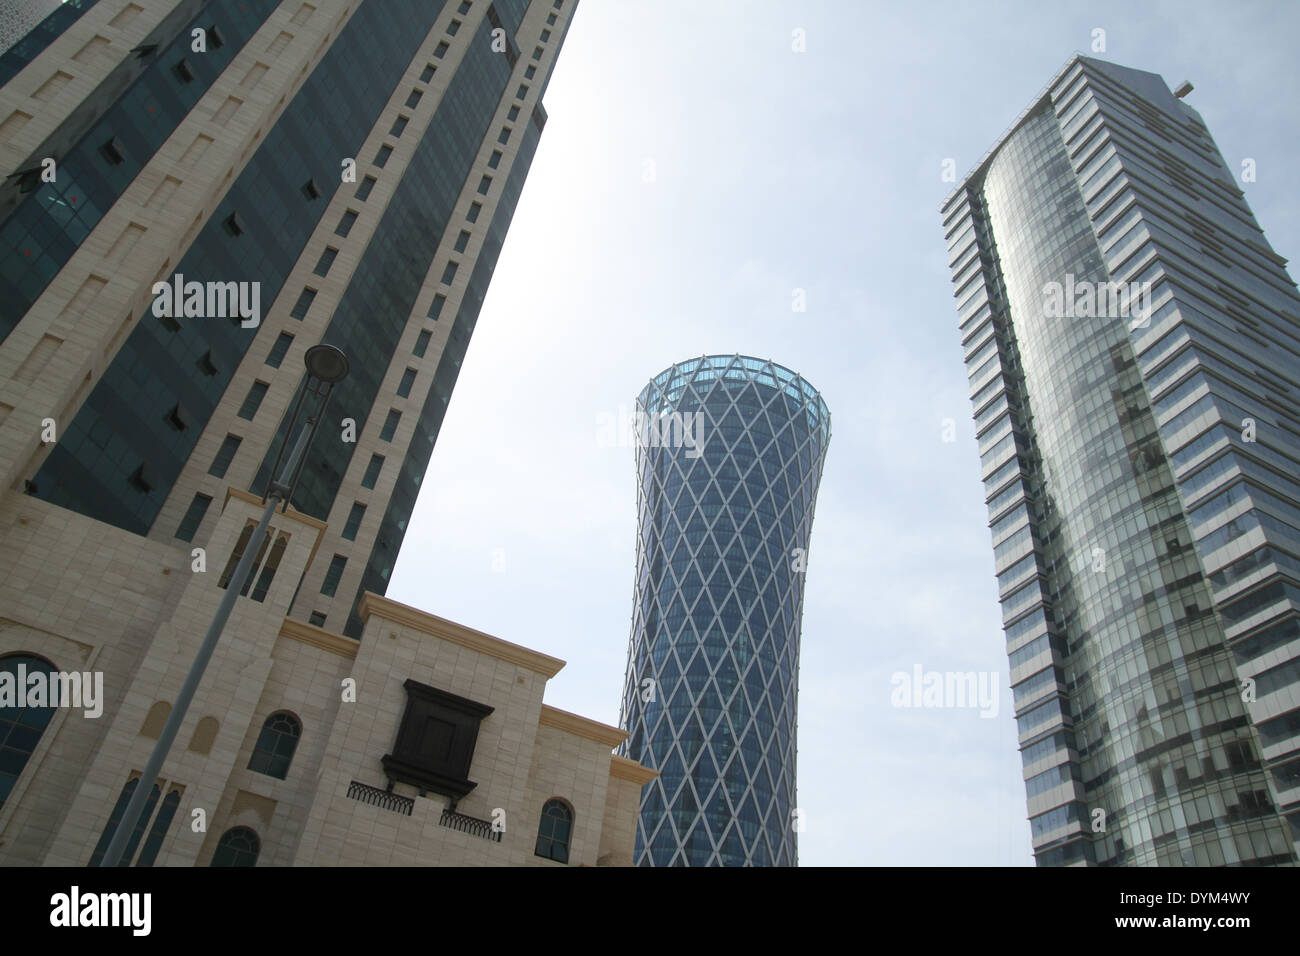 Skyscrapers in Doha. Credit: David Mbiyu/Alamy Live News Stock Photo